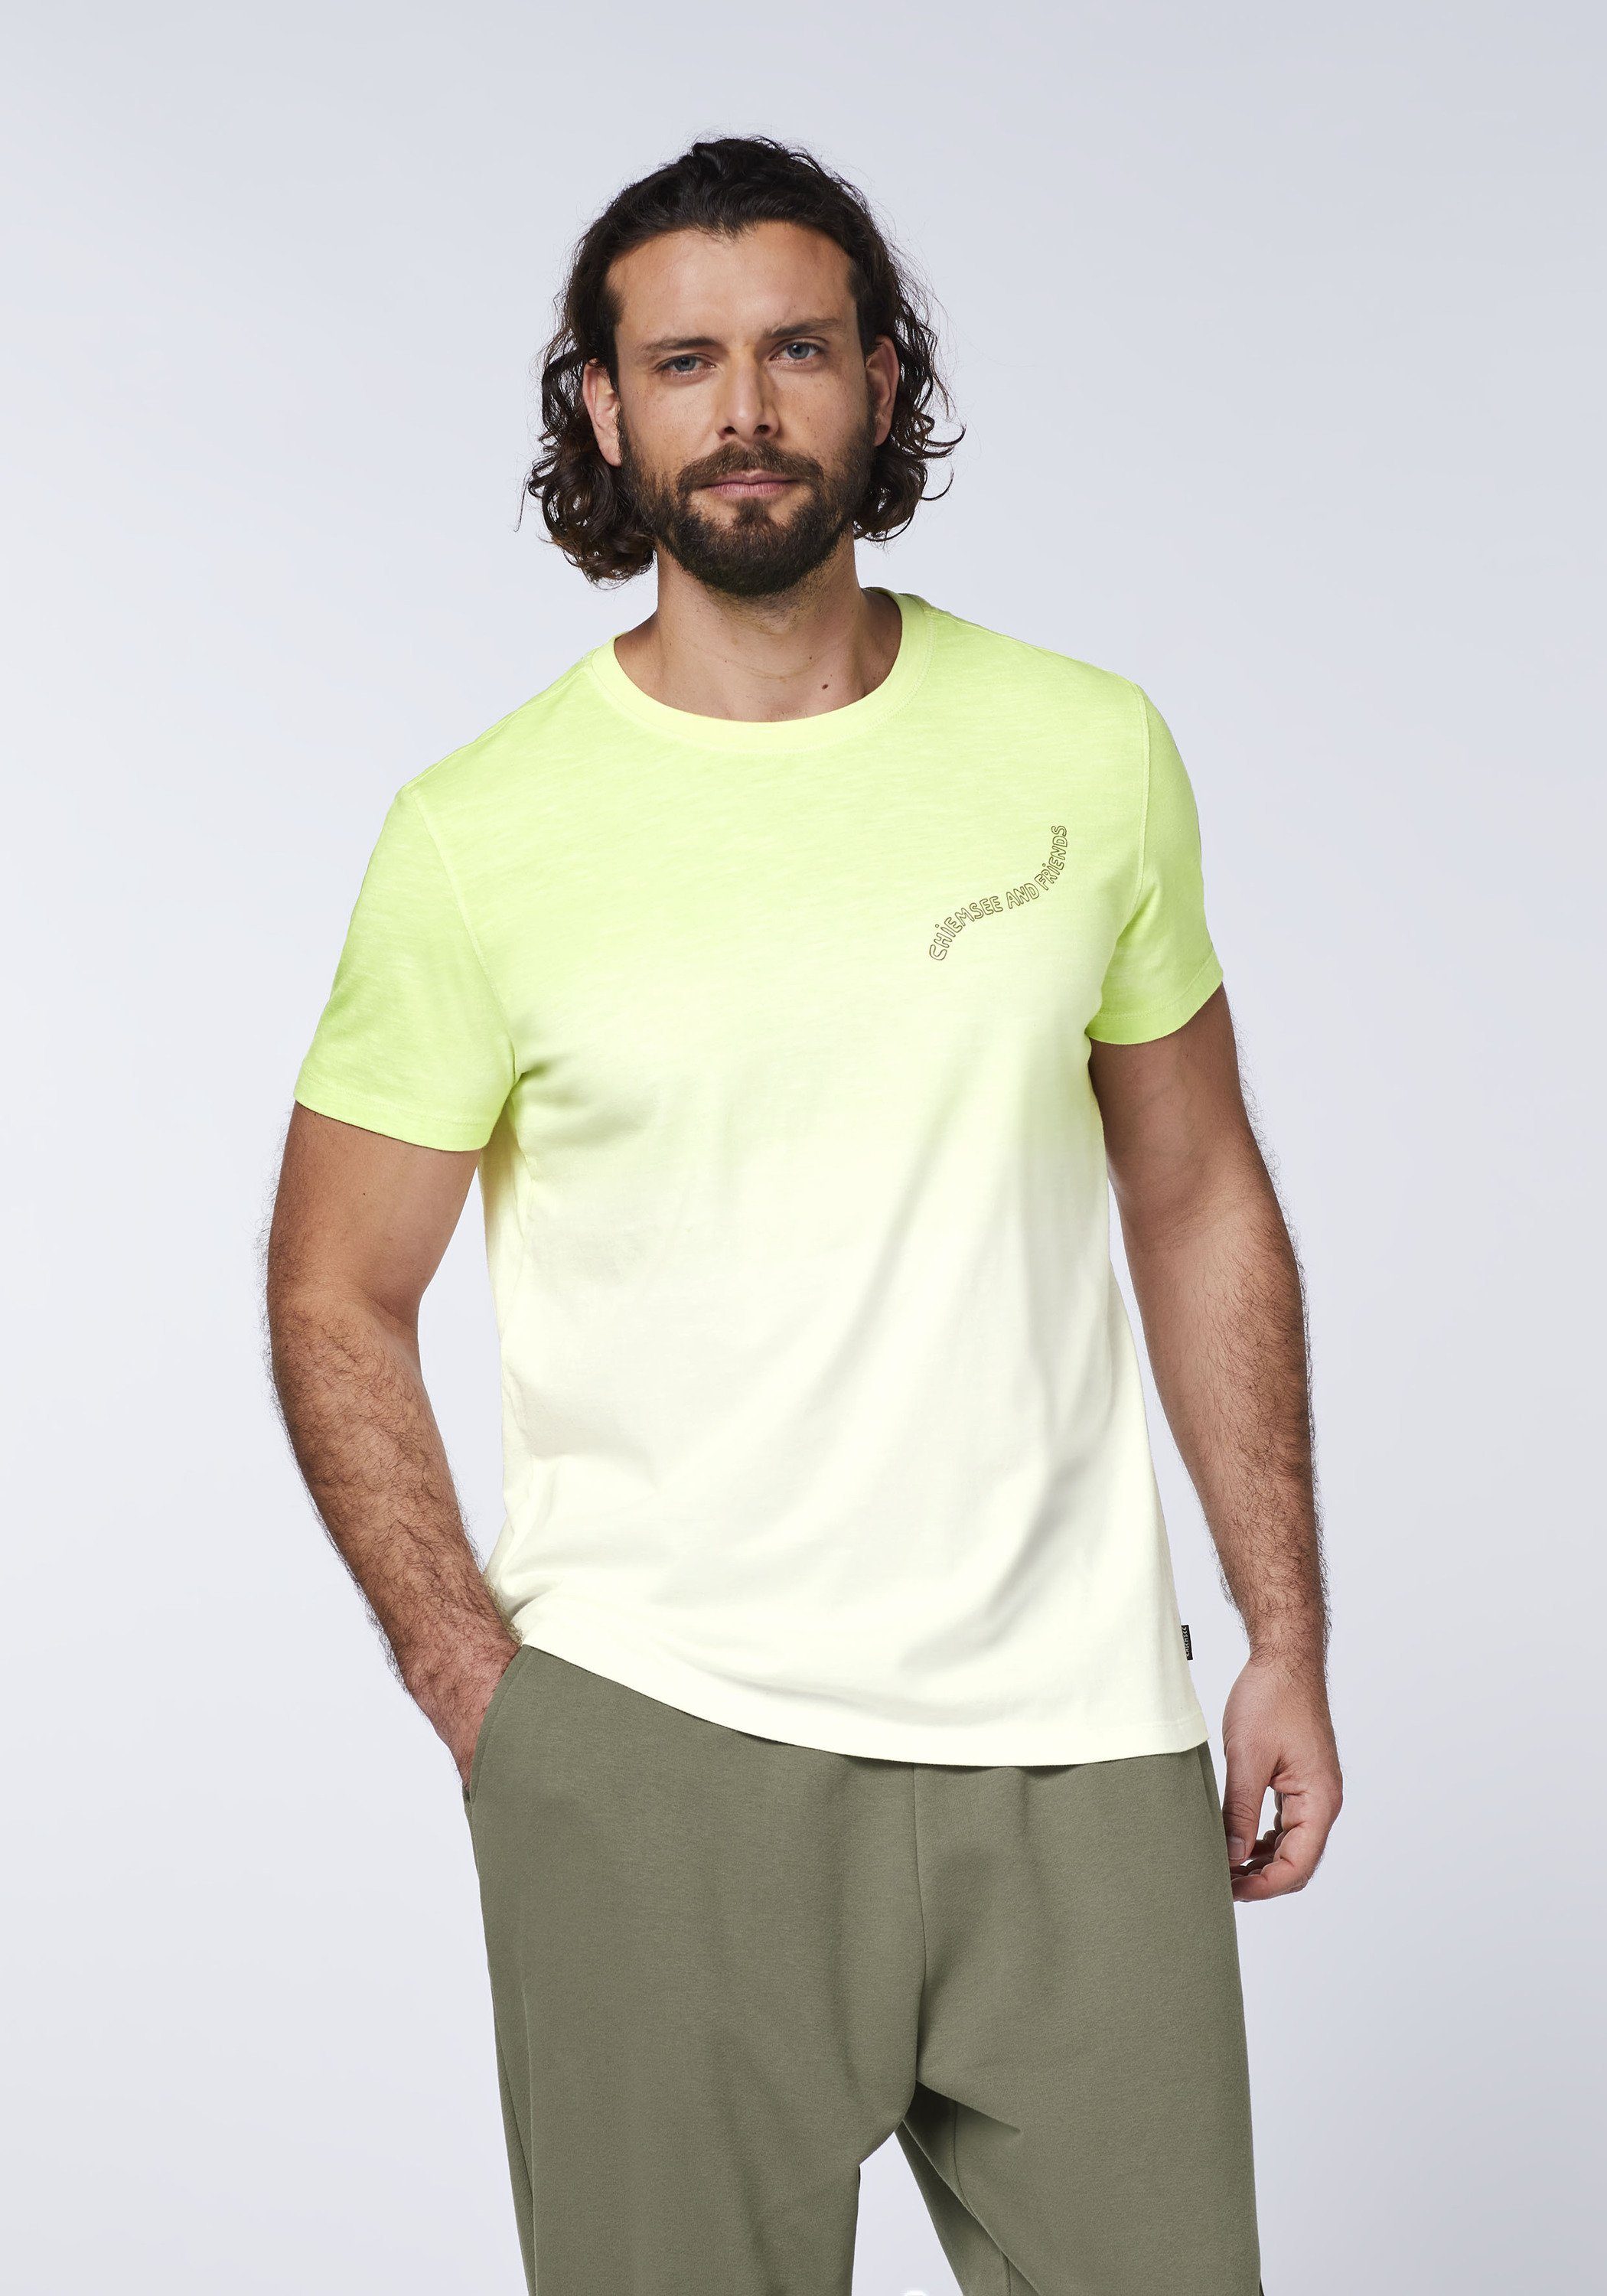 Chiemsee Print-Shirt T-Shirt Green/Dark Green im 6268 1 Farbverlauf mit Light Slub-Yarn-Textur